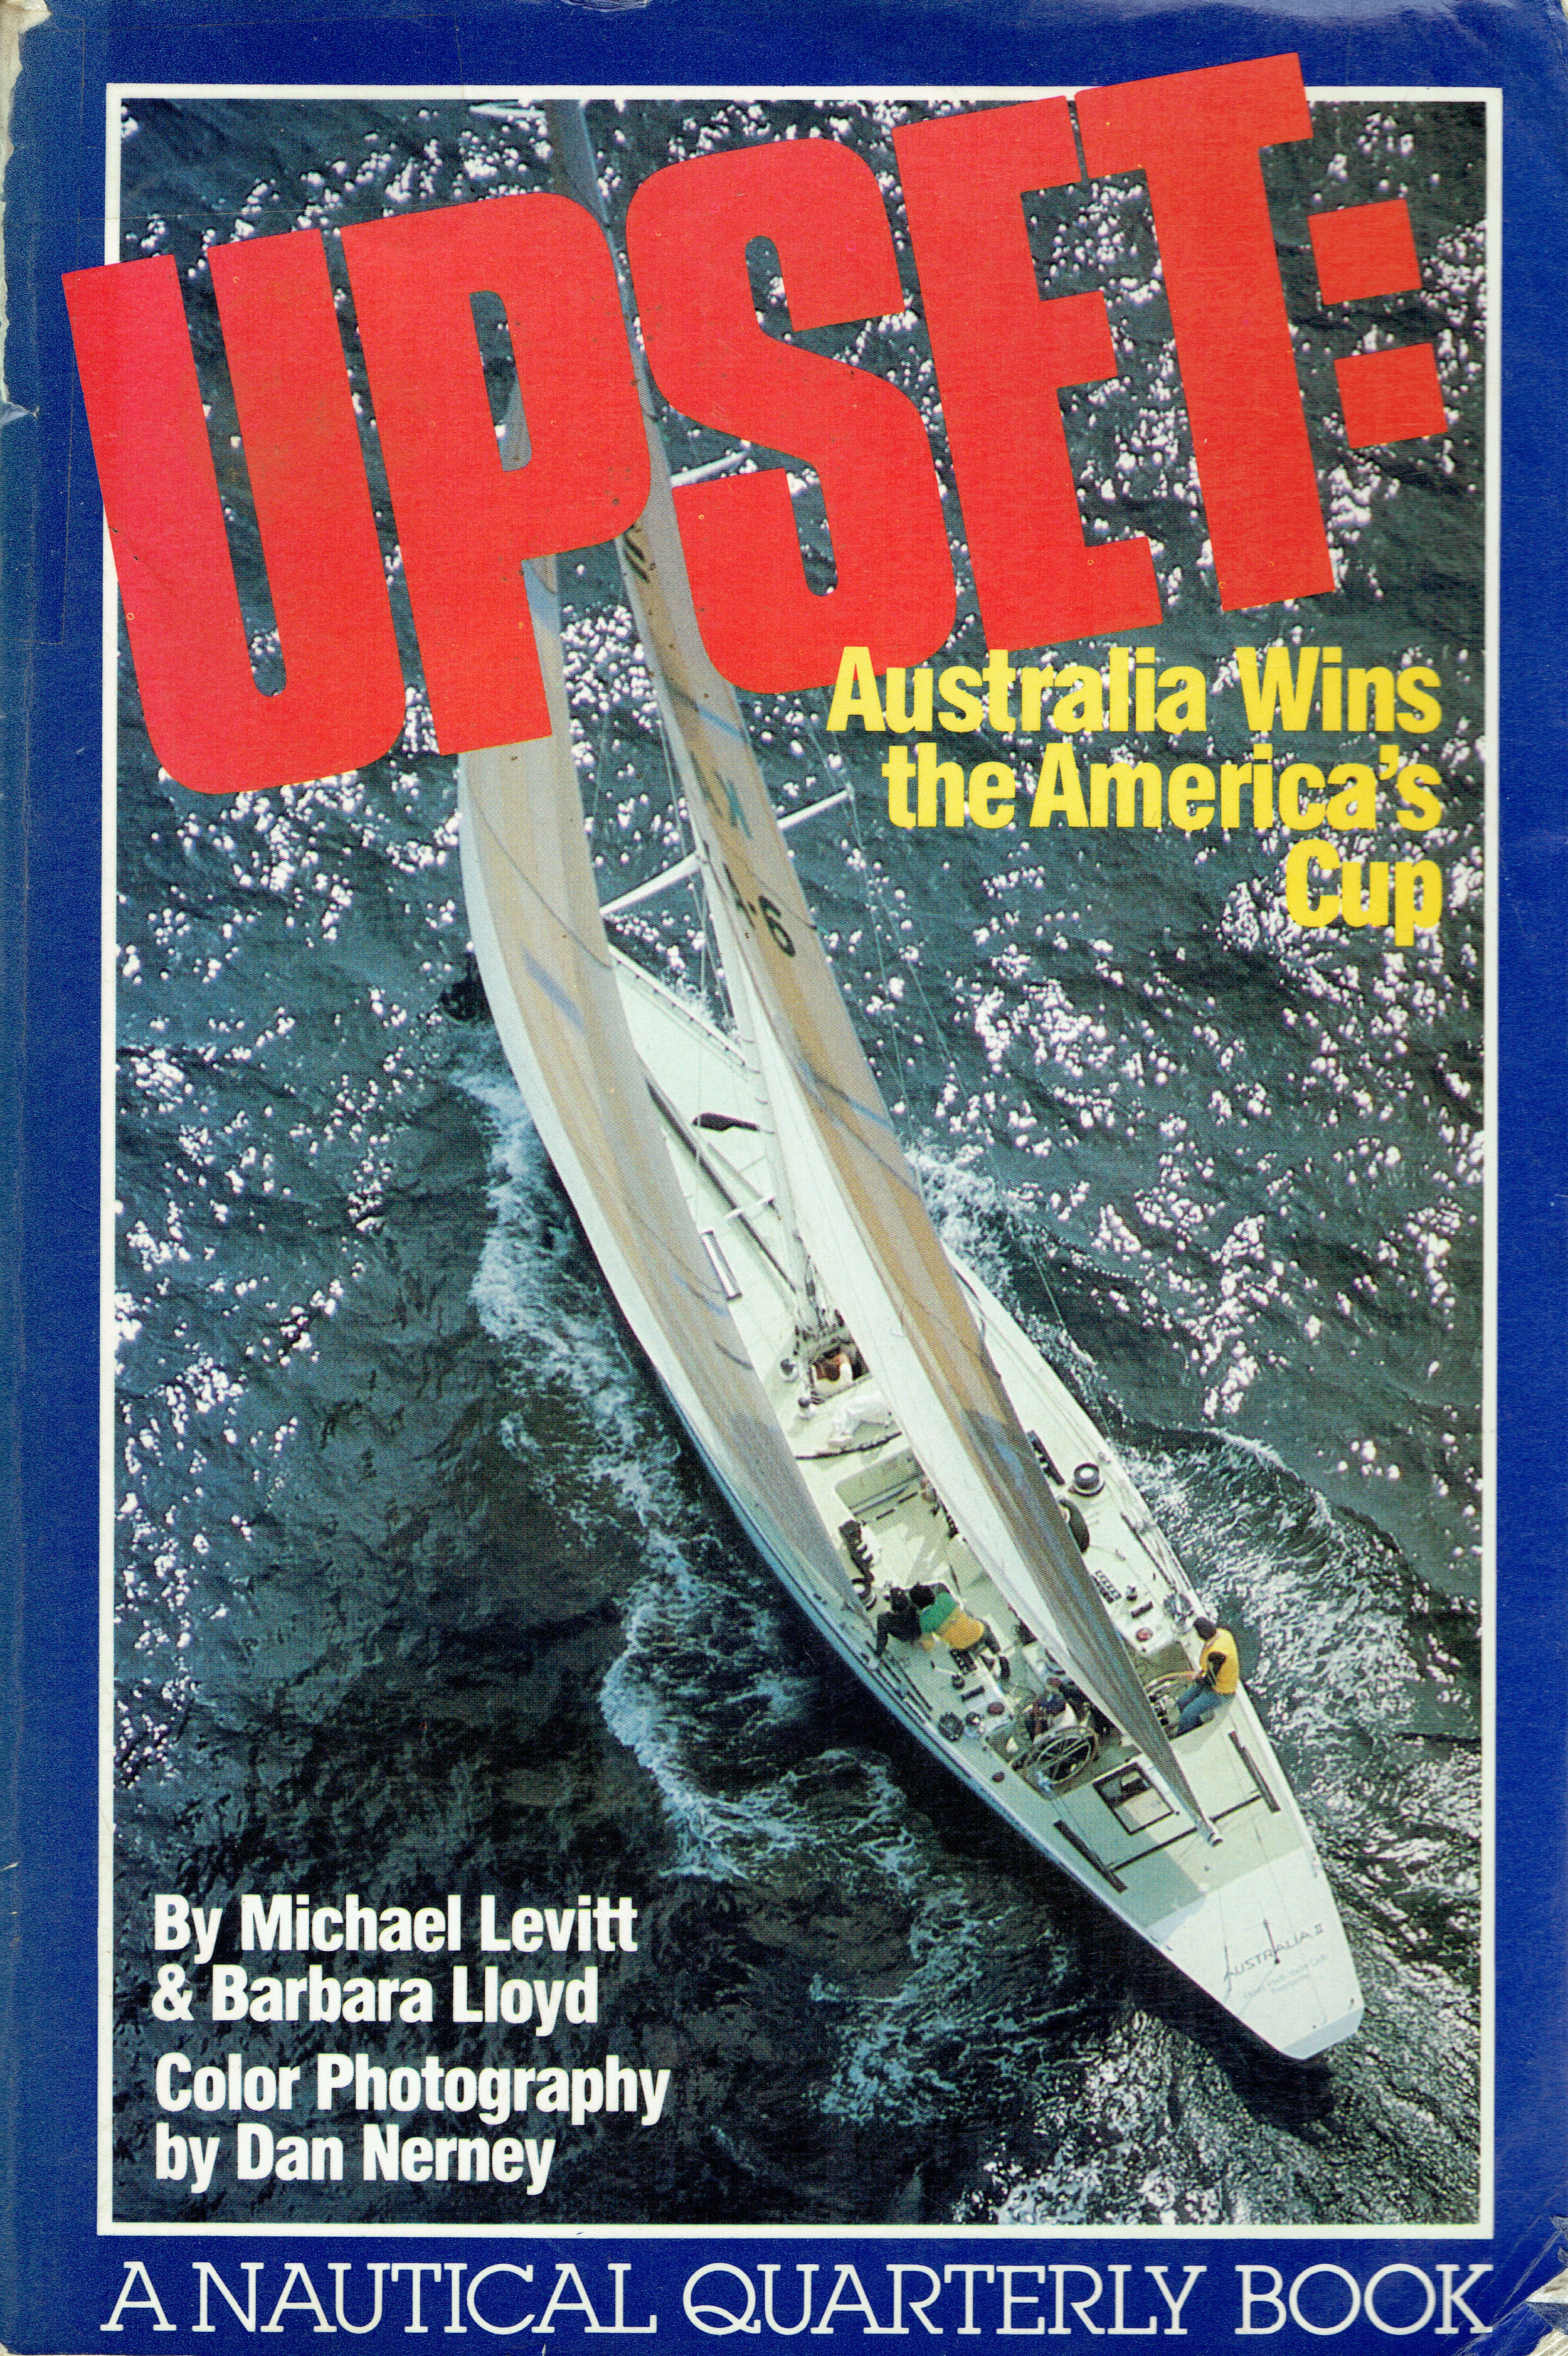 Framed poster celebrating Australia II winning 1983 America's Cup